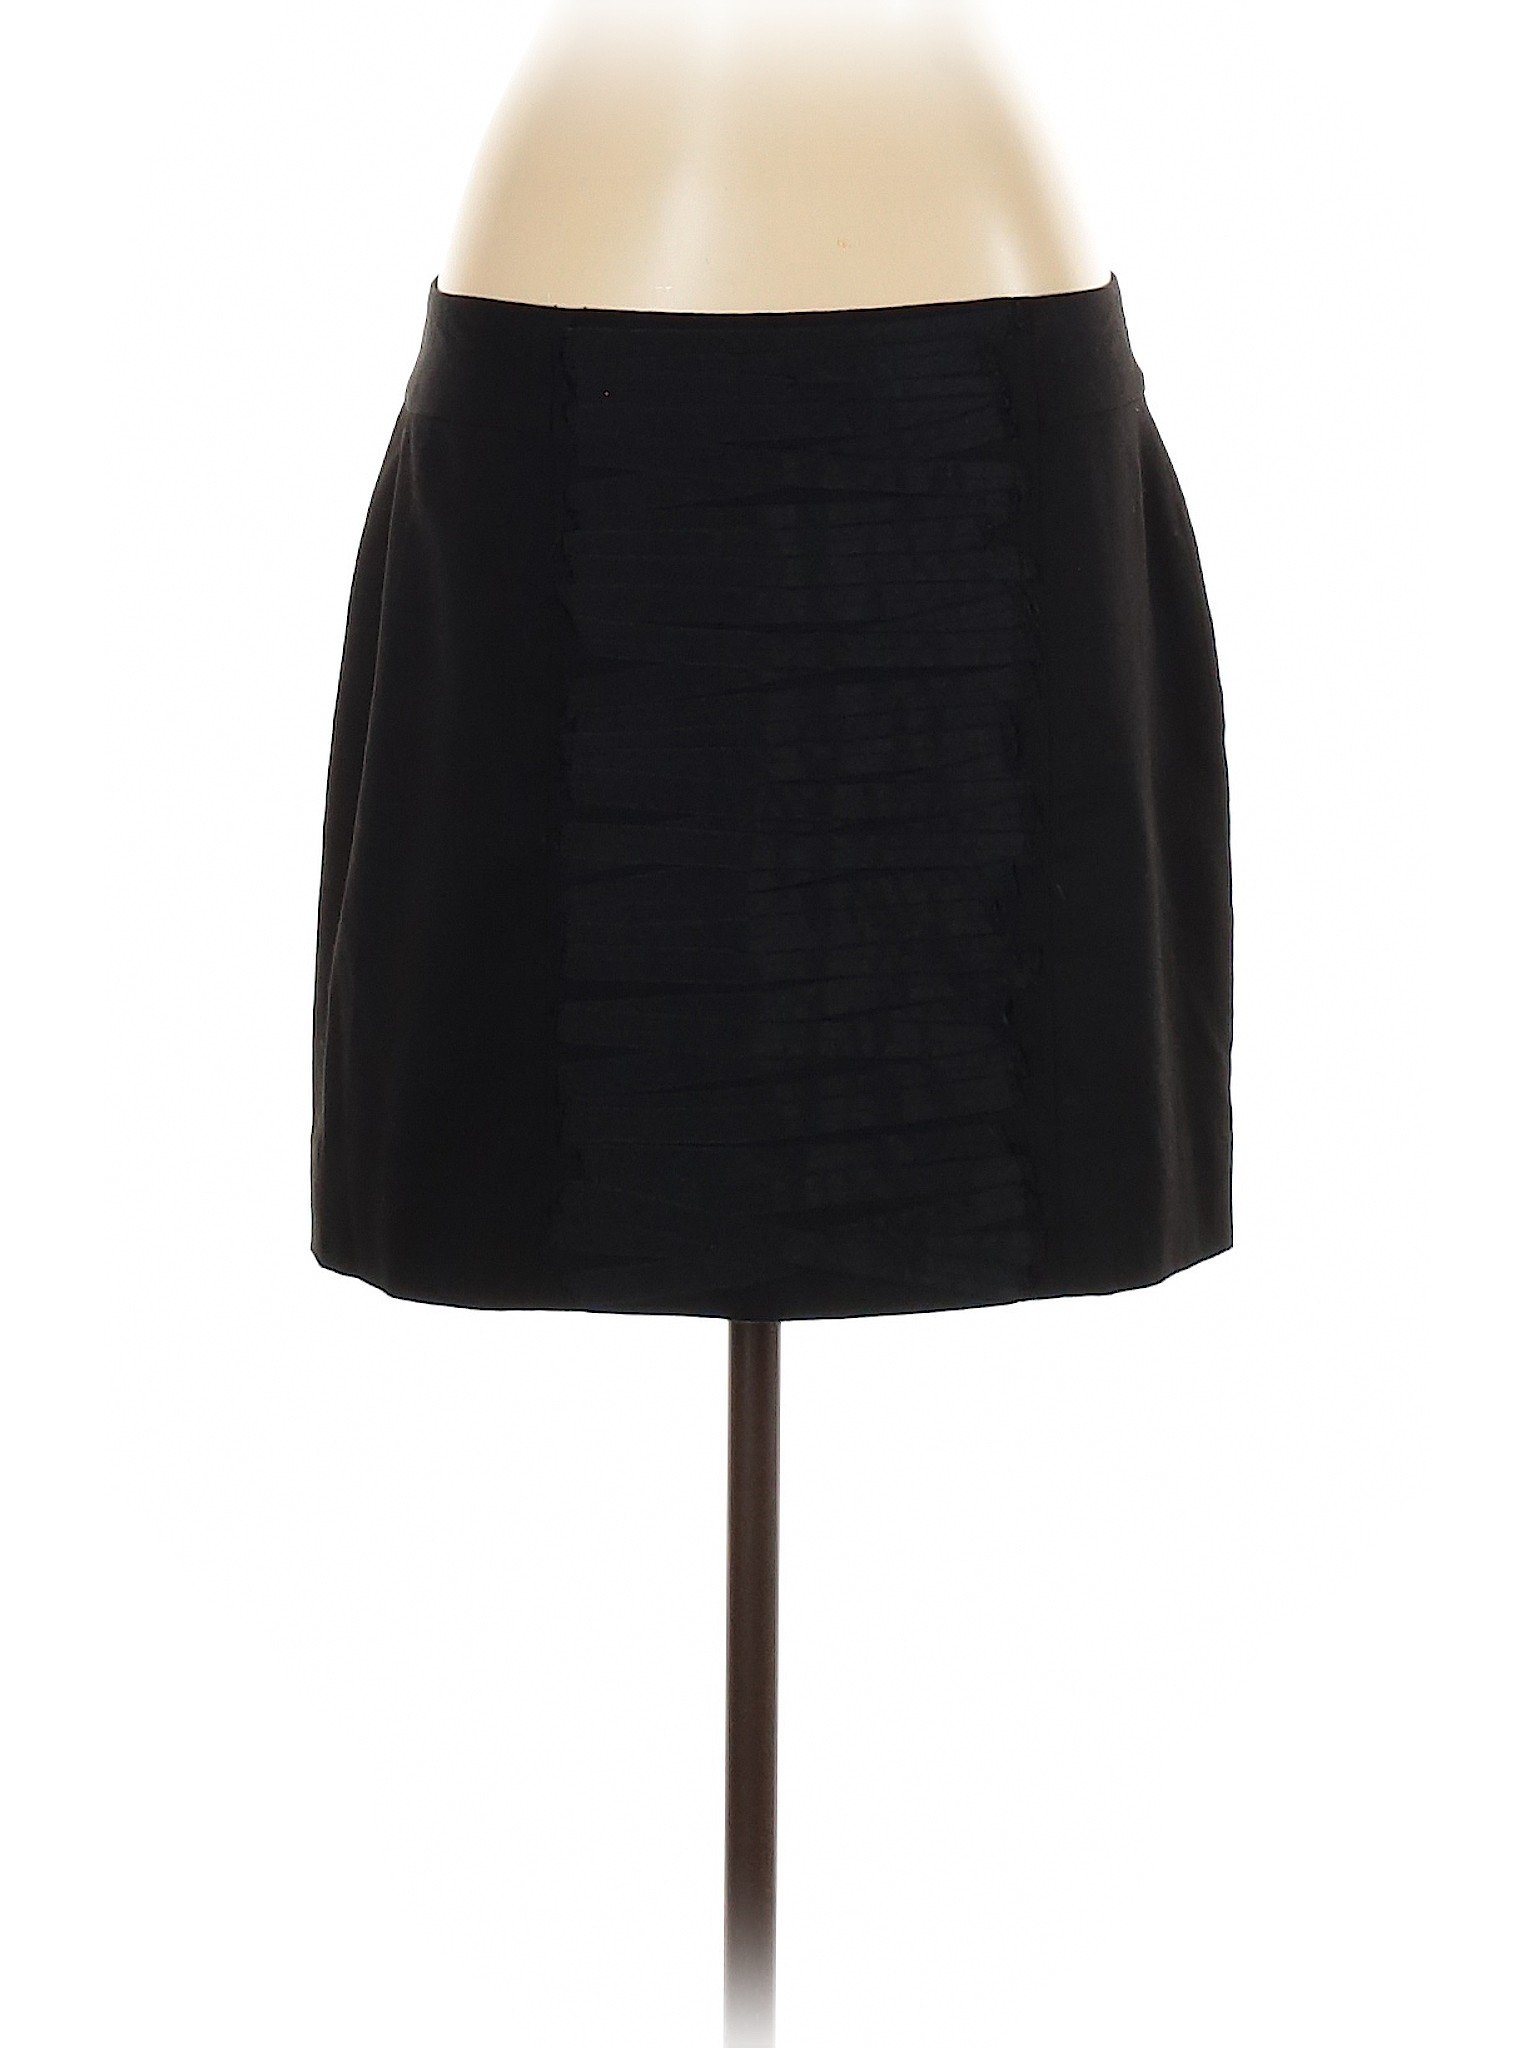 Gap Women Black Casual Skirt 4 | eBay